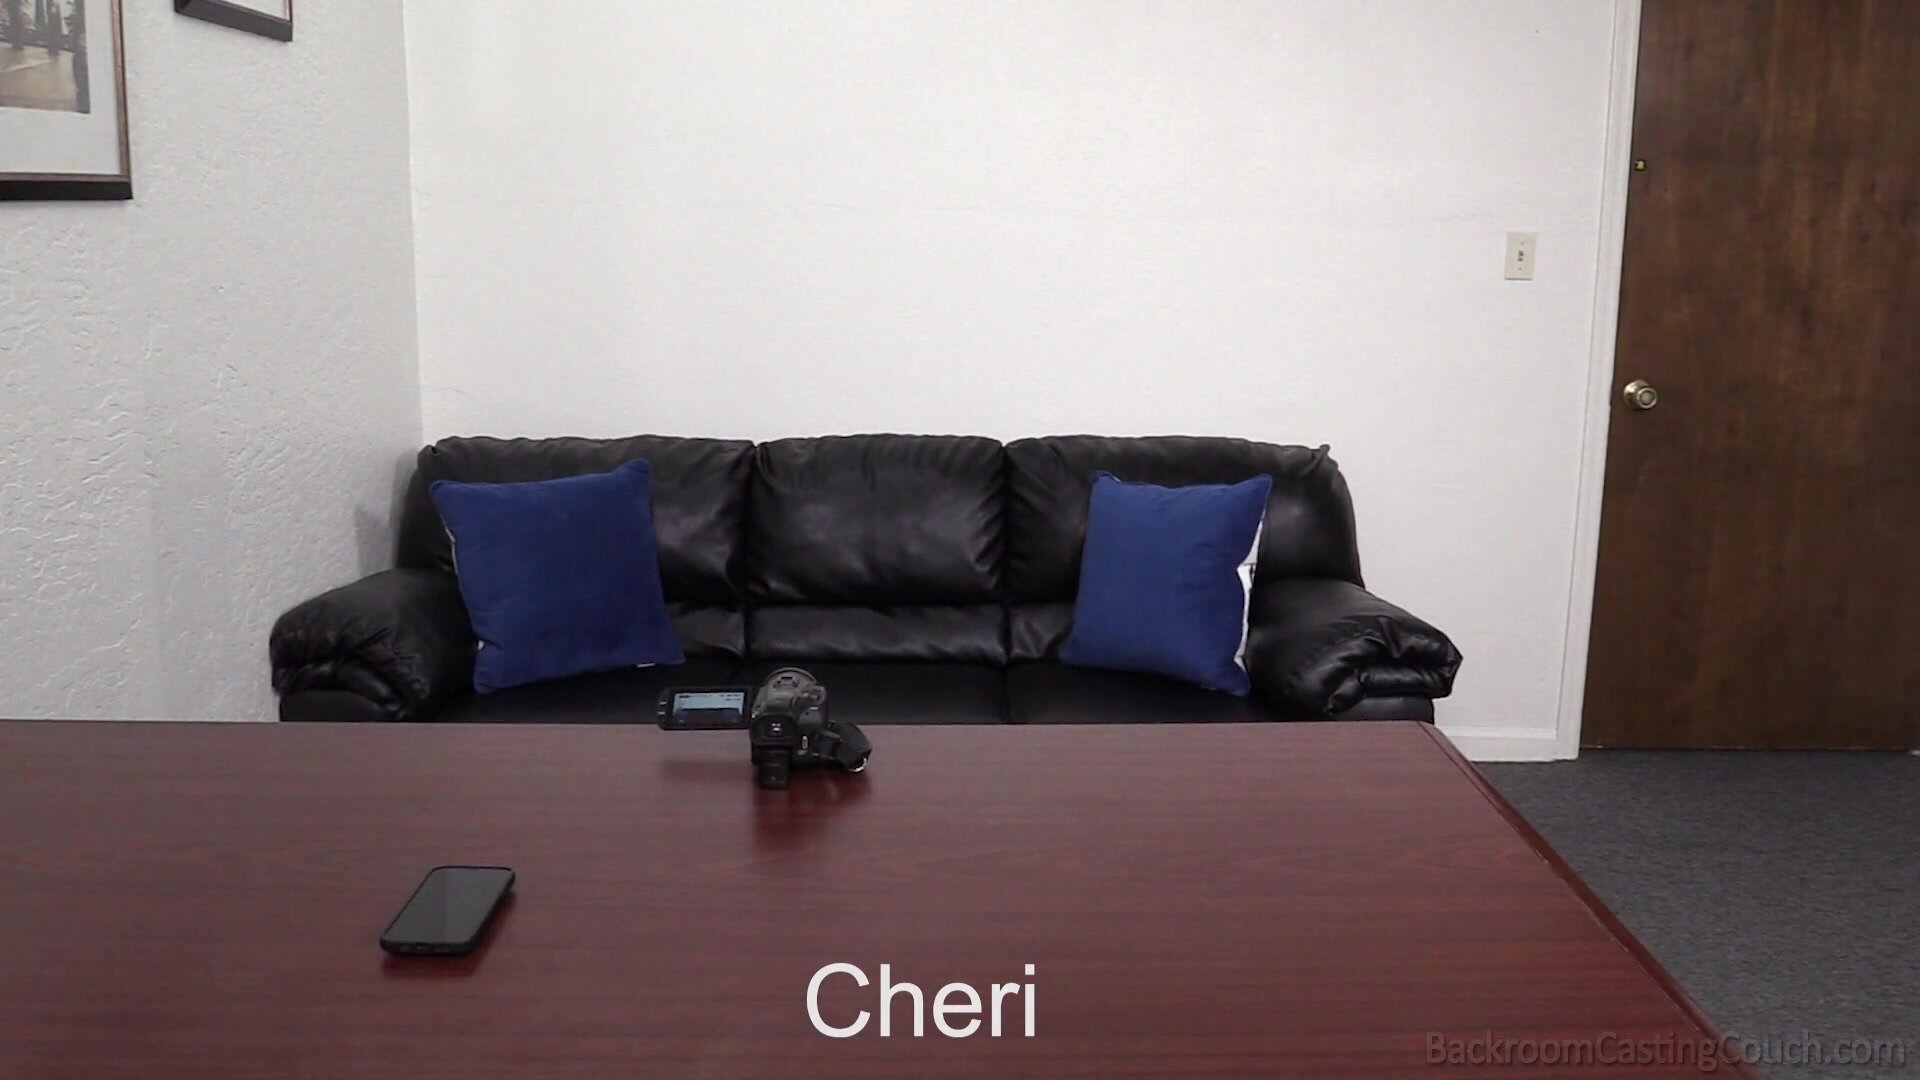 Cheri - Best Interview I've Ever Had